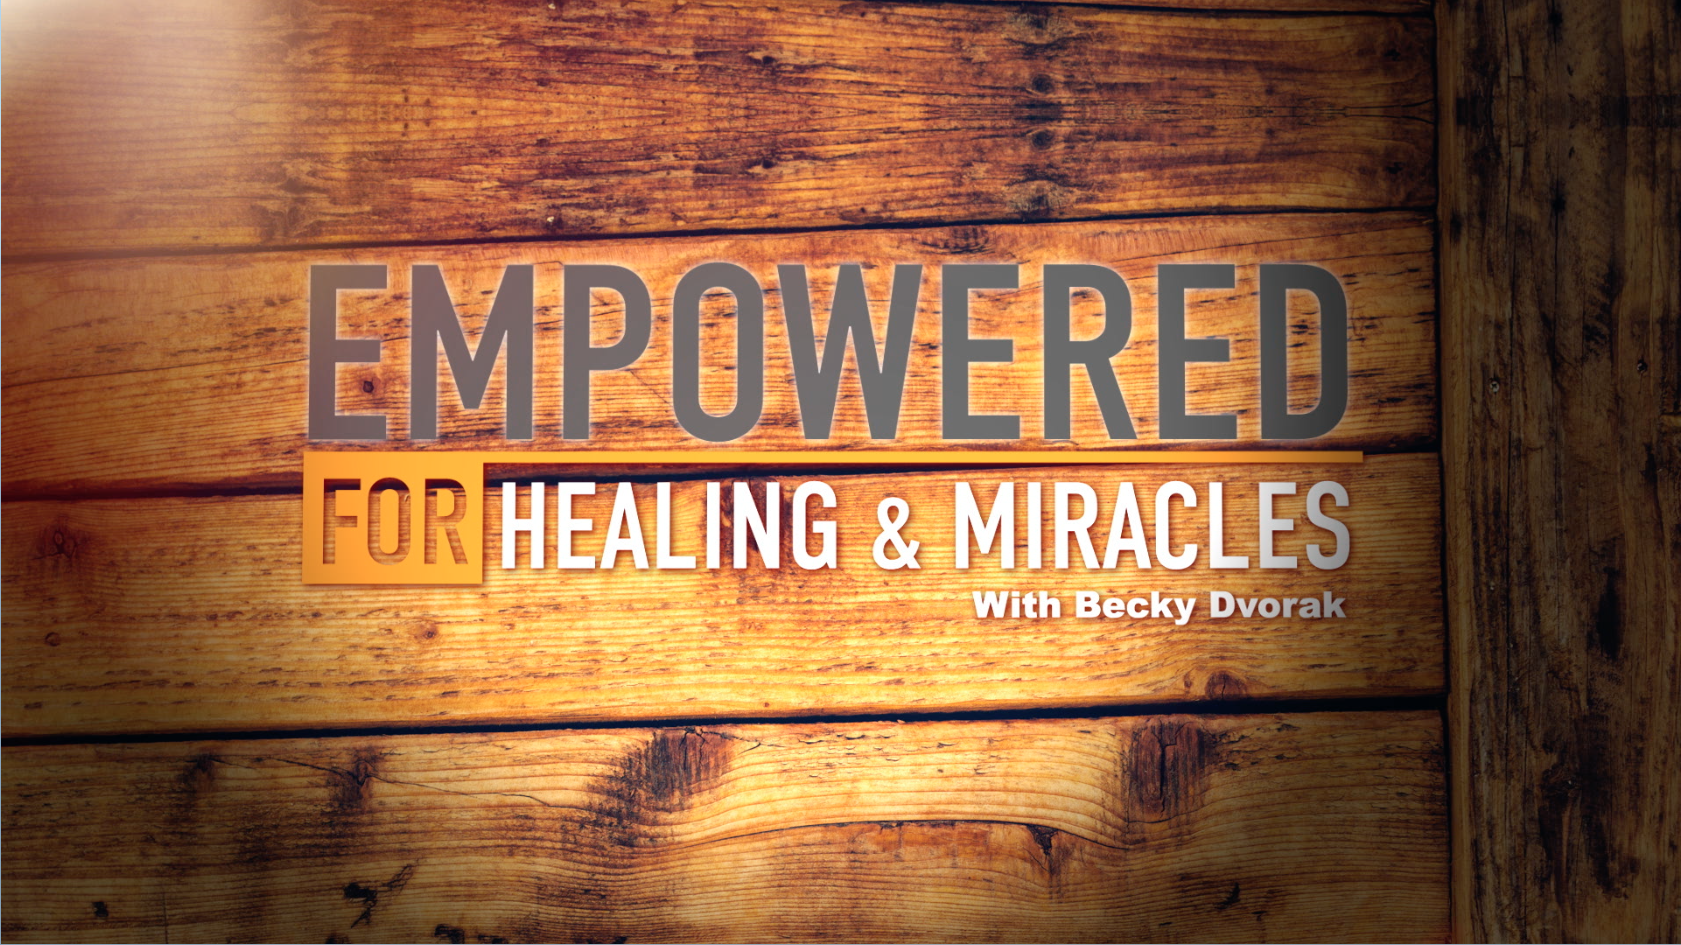 Watch: Supernatural Provision - Author Becky Dvorak